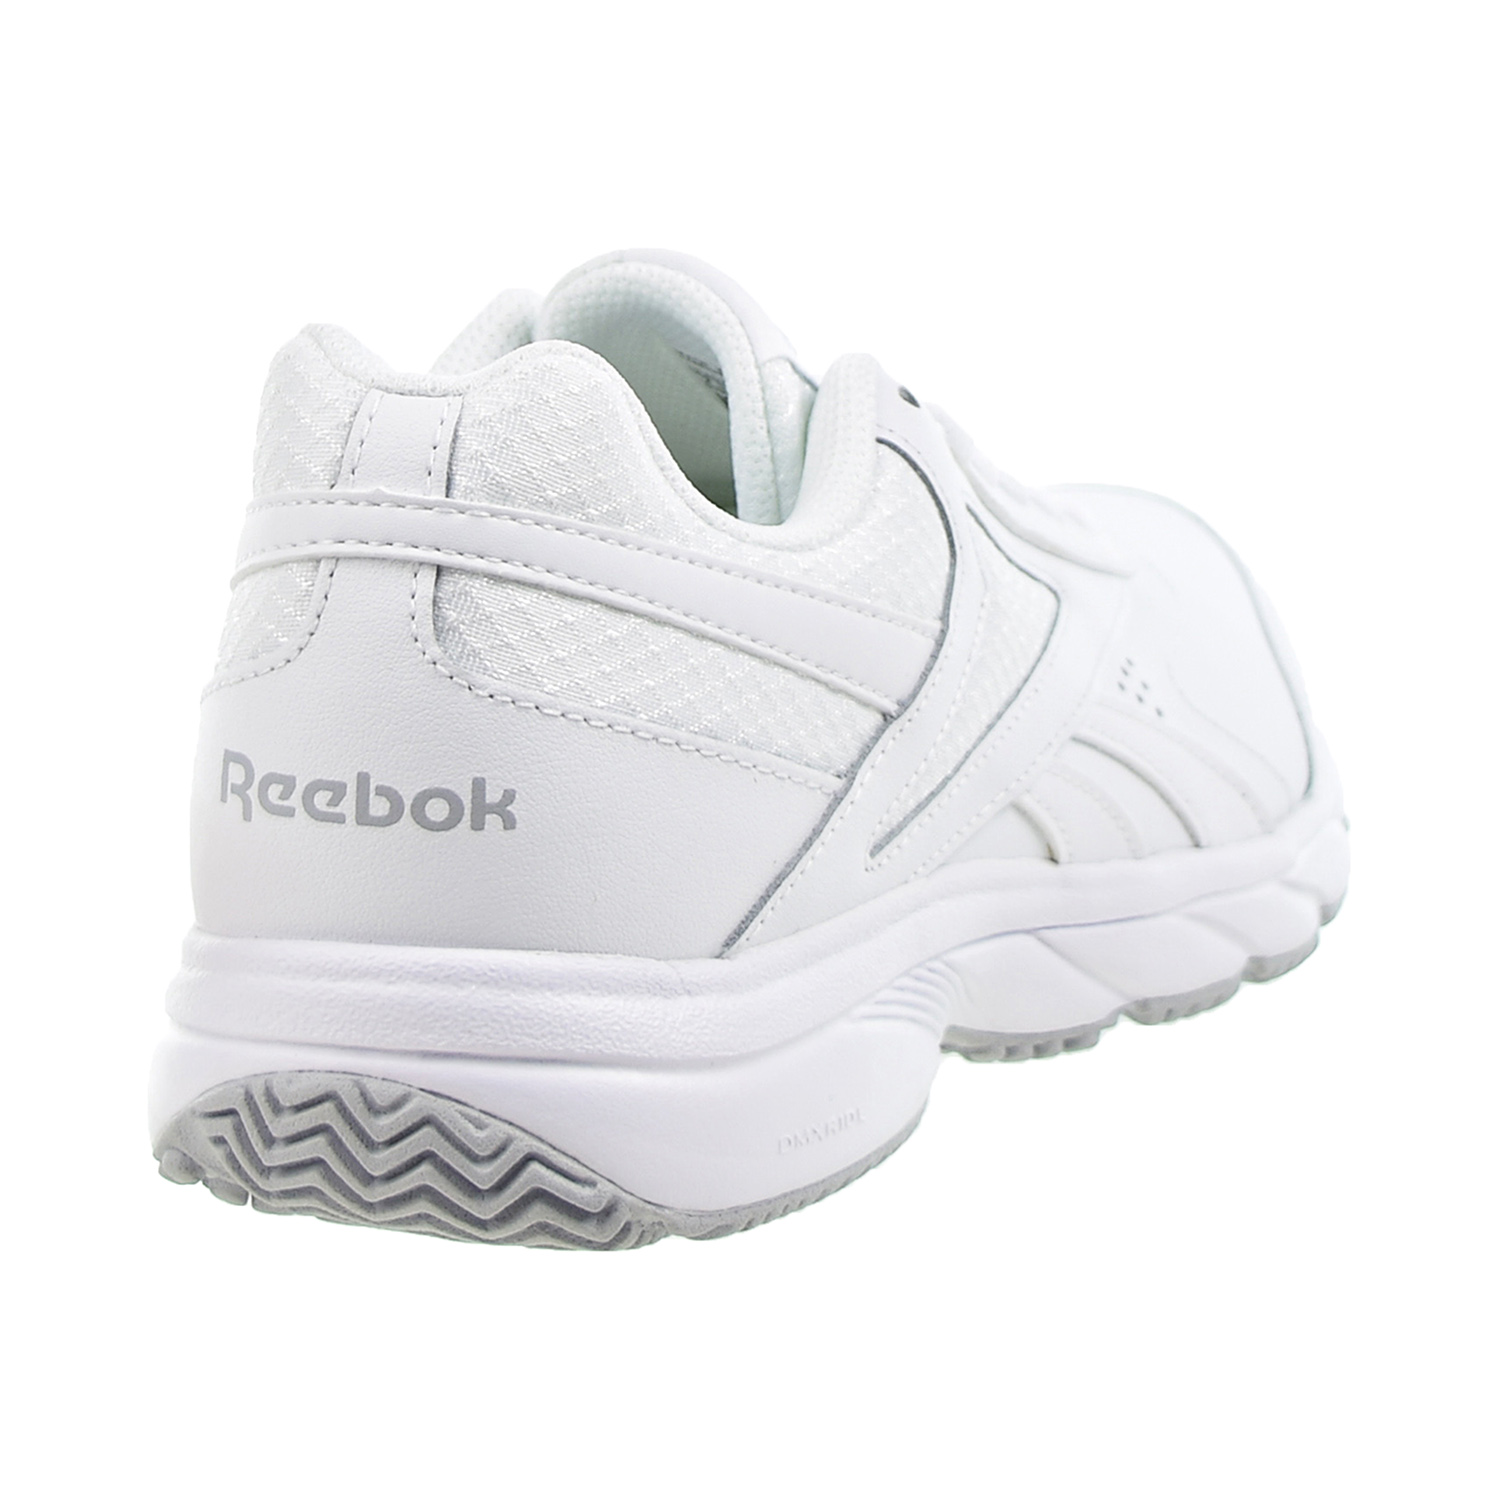 Reebok Work N Cushion 4.0 Men's Shoes Oil Resistant White-Cold Grey 2 fu7354 (7 M US)